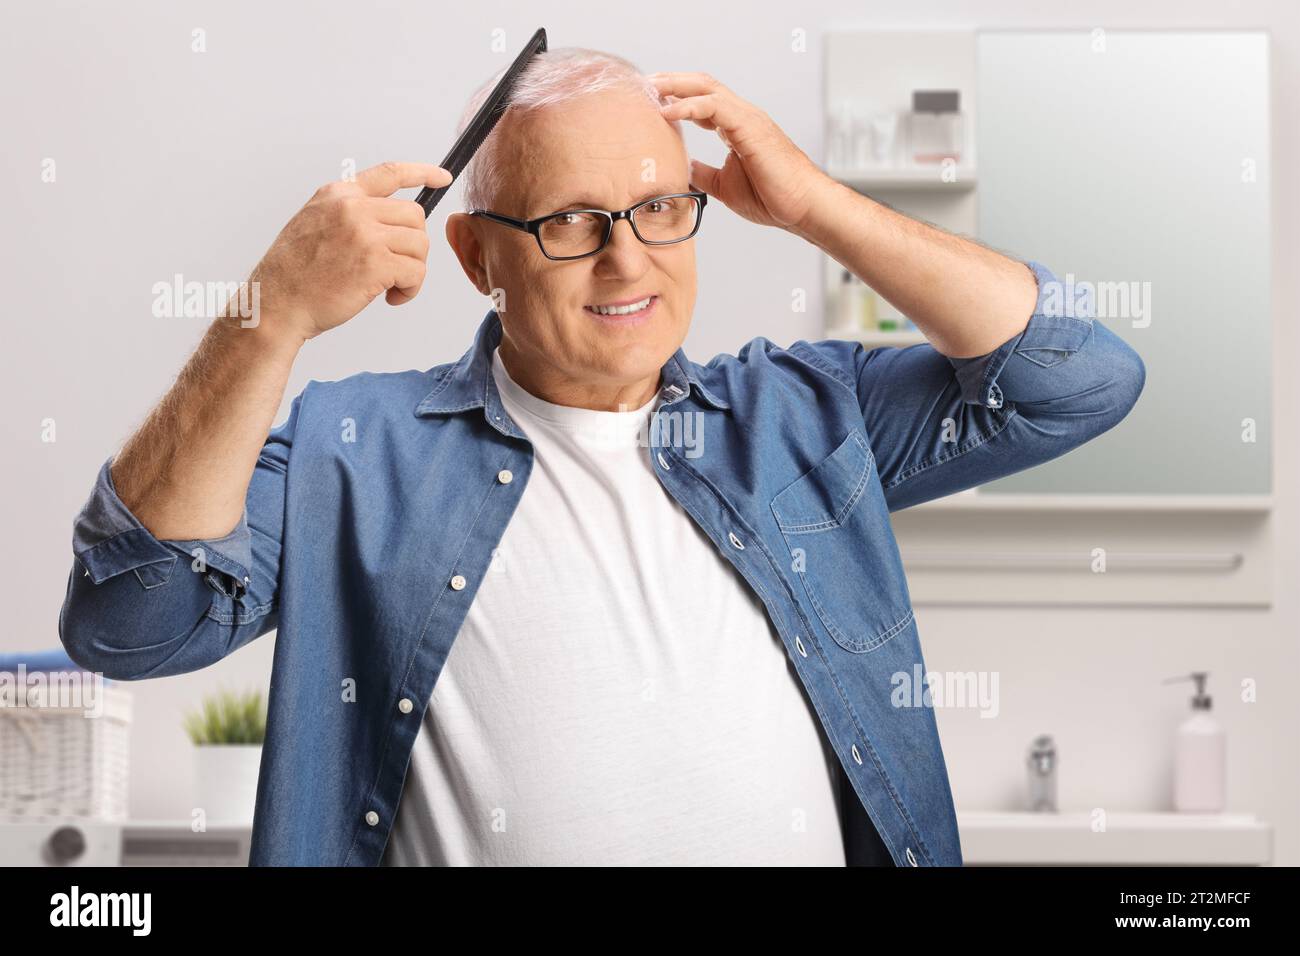 Cheerful mature man combing hair in a bathroom Stock Photo